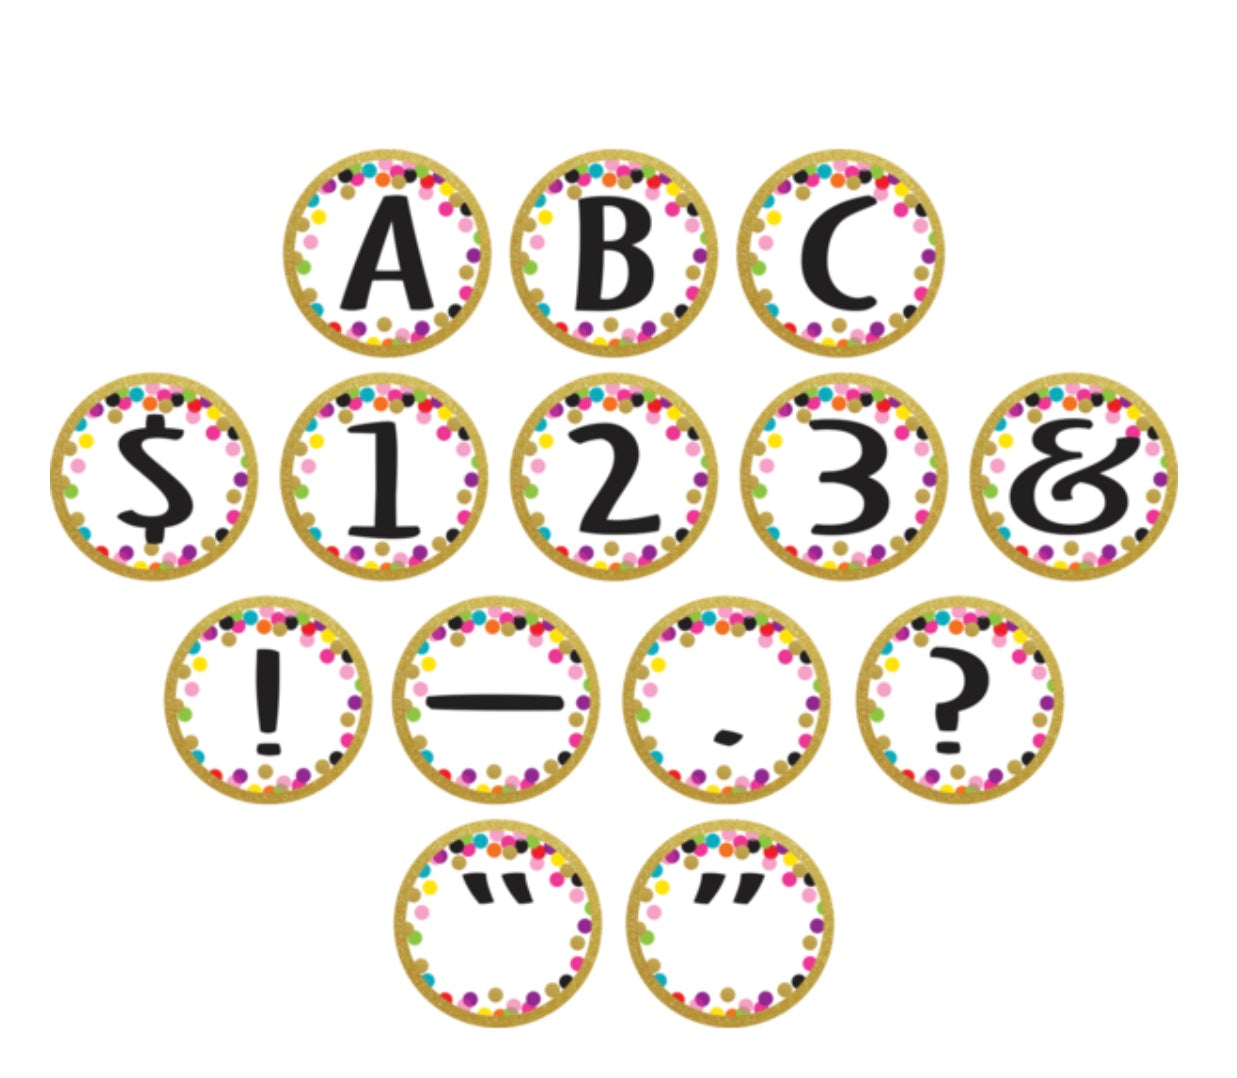 Letters: Confetti Circle Letters, 3 1/2”